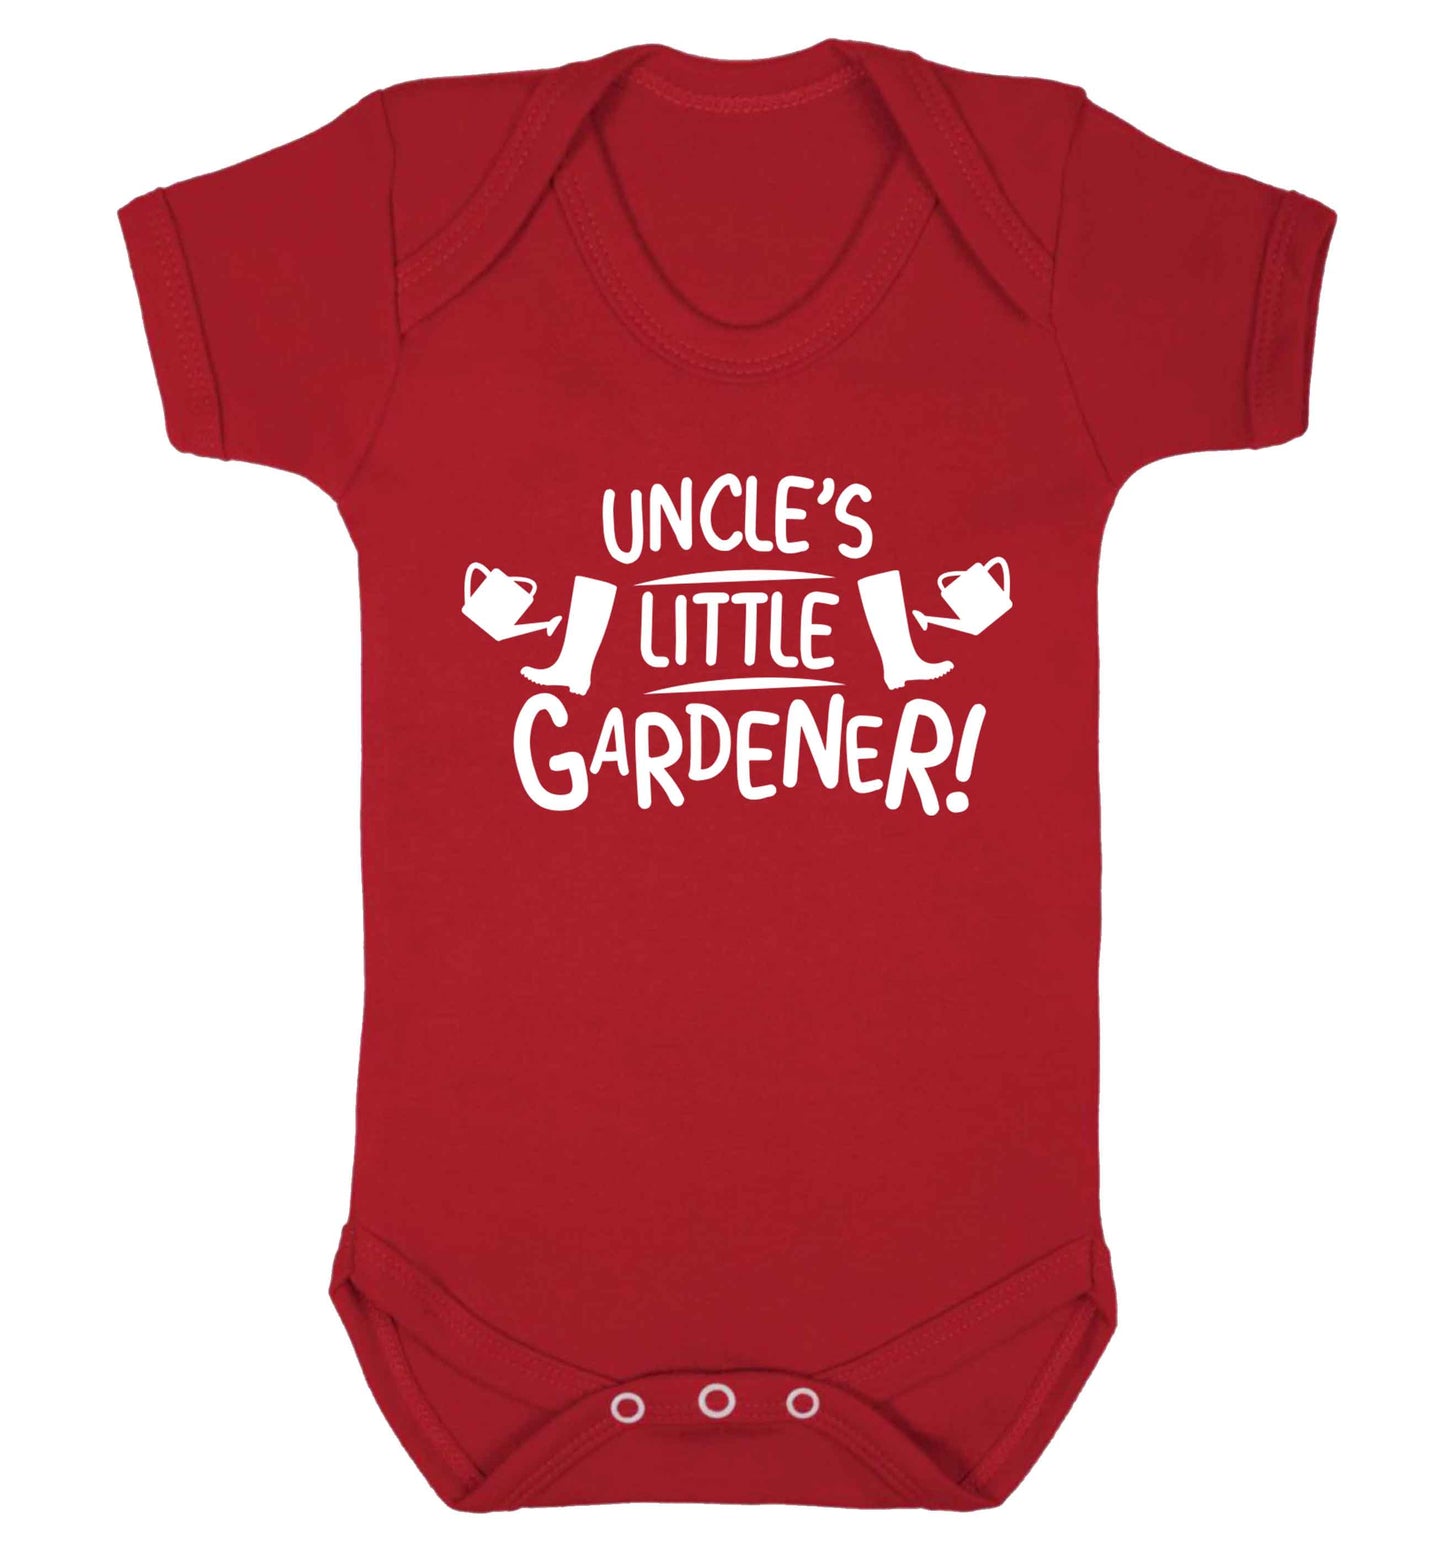 Uncle's little gardener Baby Vest red 18-24 months